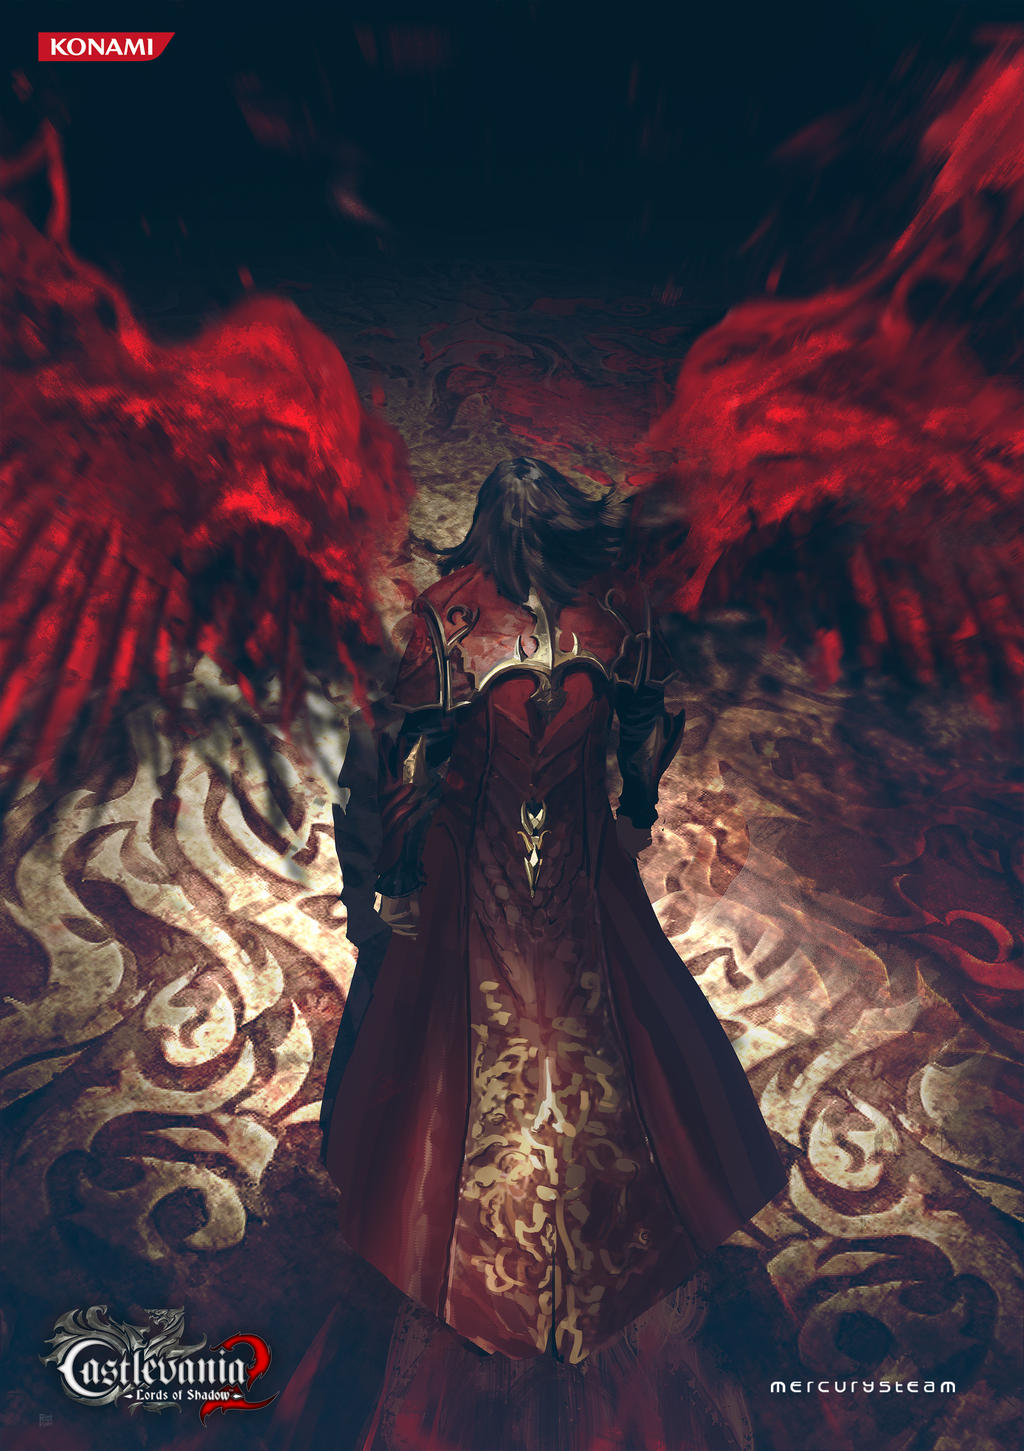 dracula_blood_wings_by_michaelbroussard-d78fmxm.jpg